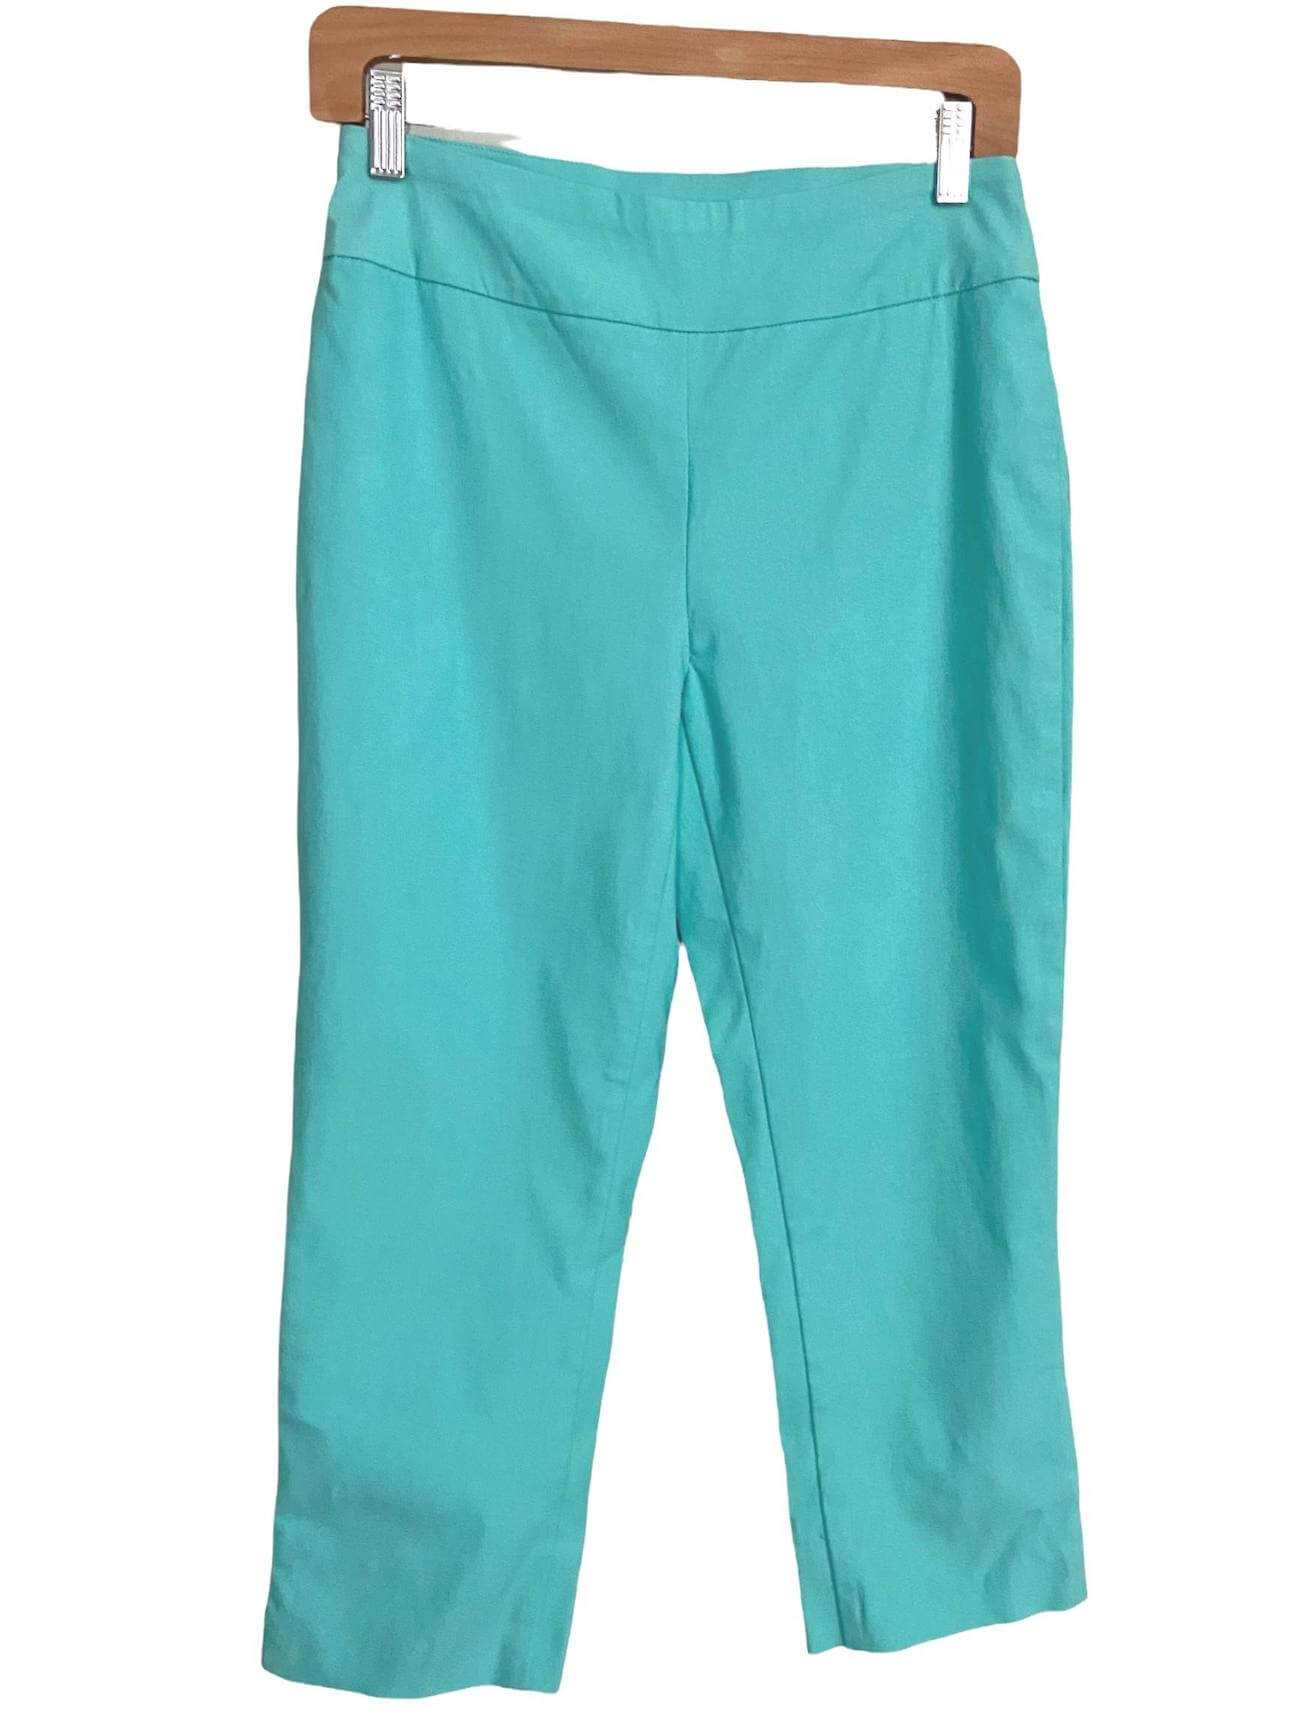 Women's Hue Cropped & Capri Pants